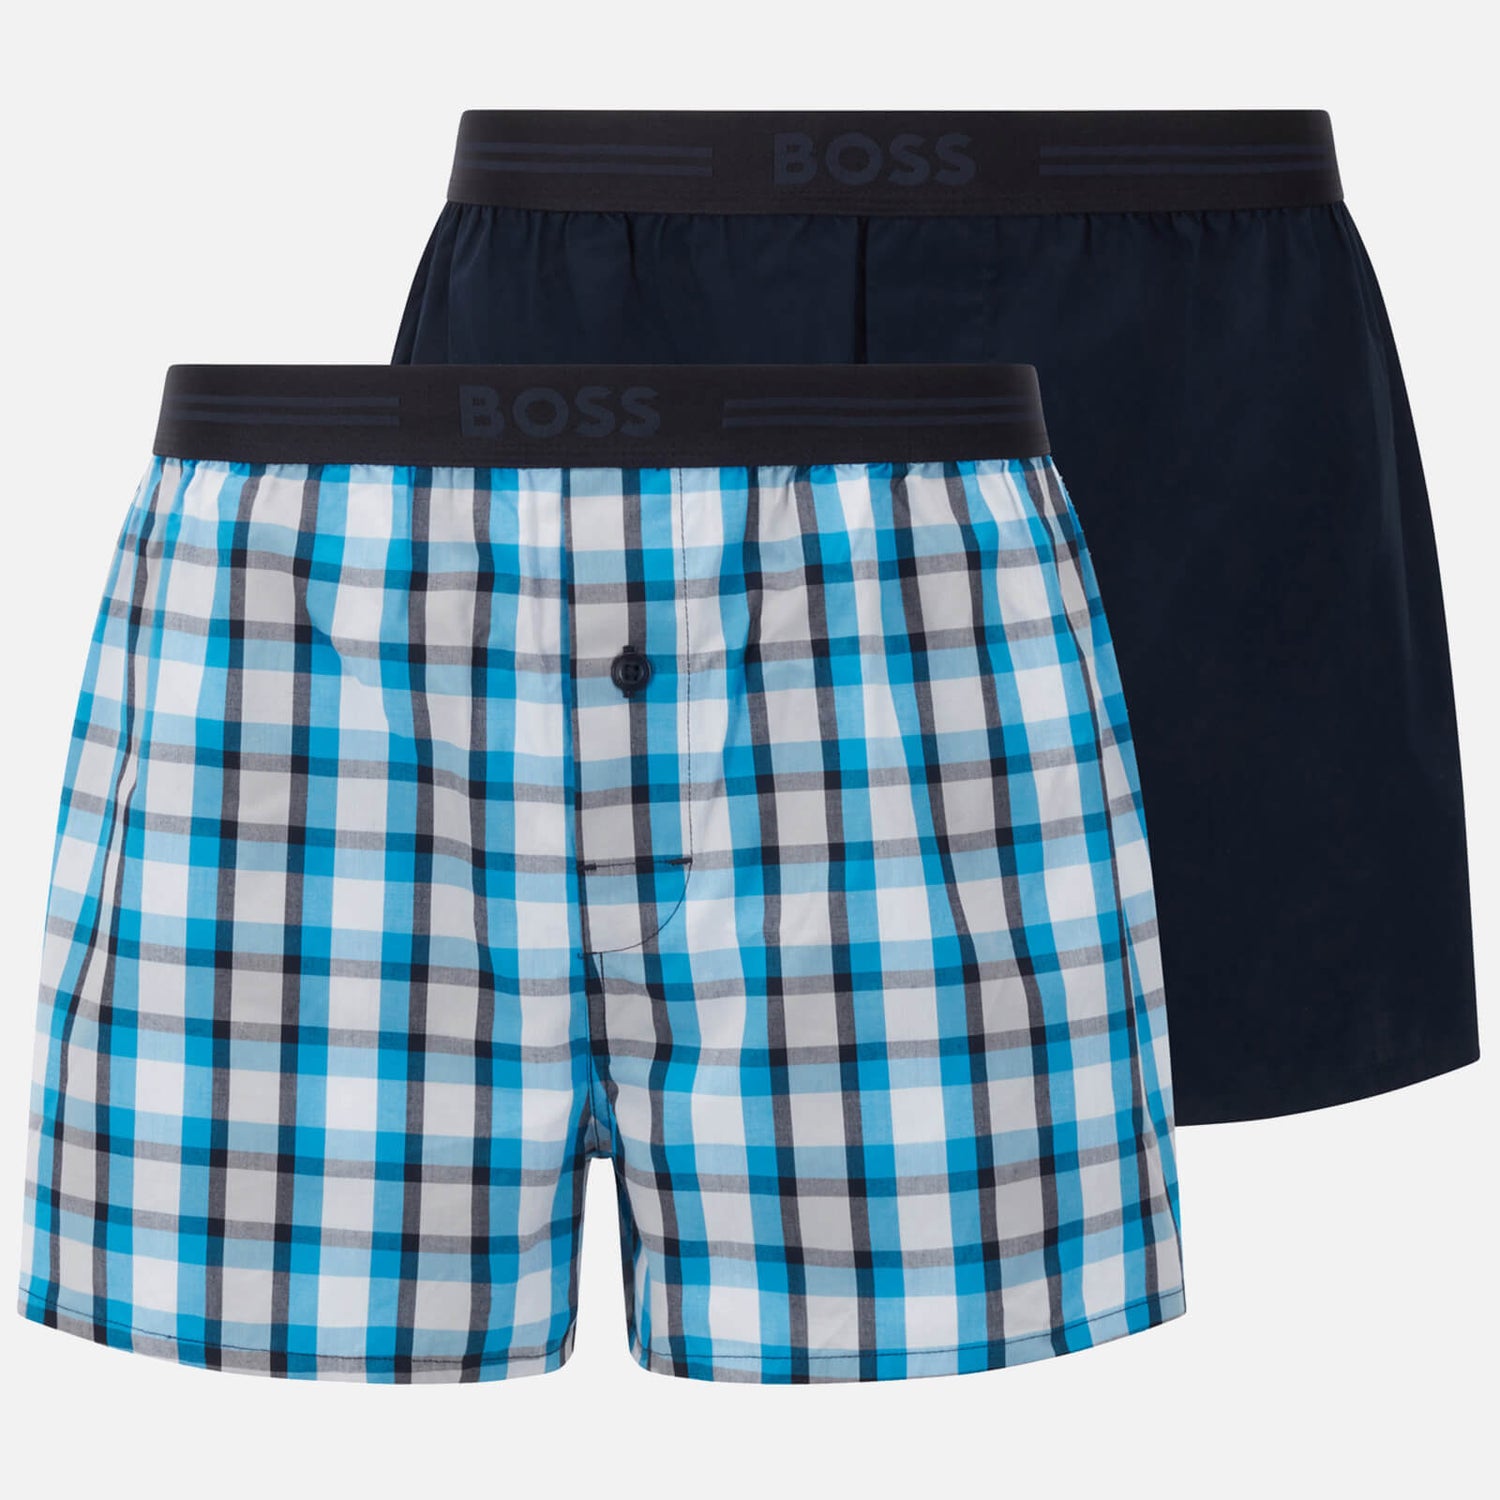 BOSS Bodywear Men's 2-Pack Boxer Shorts - Turquoise/Aqua - S